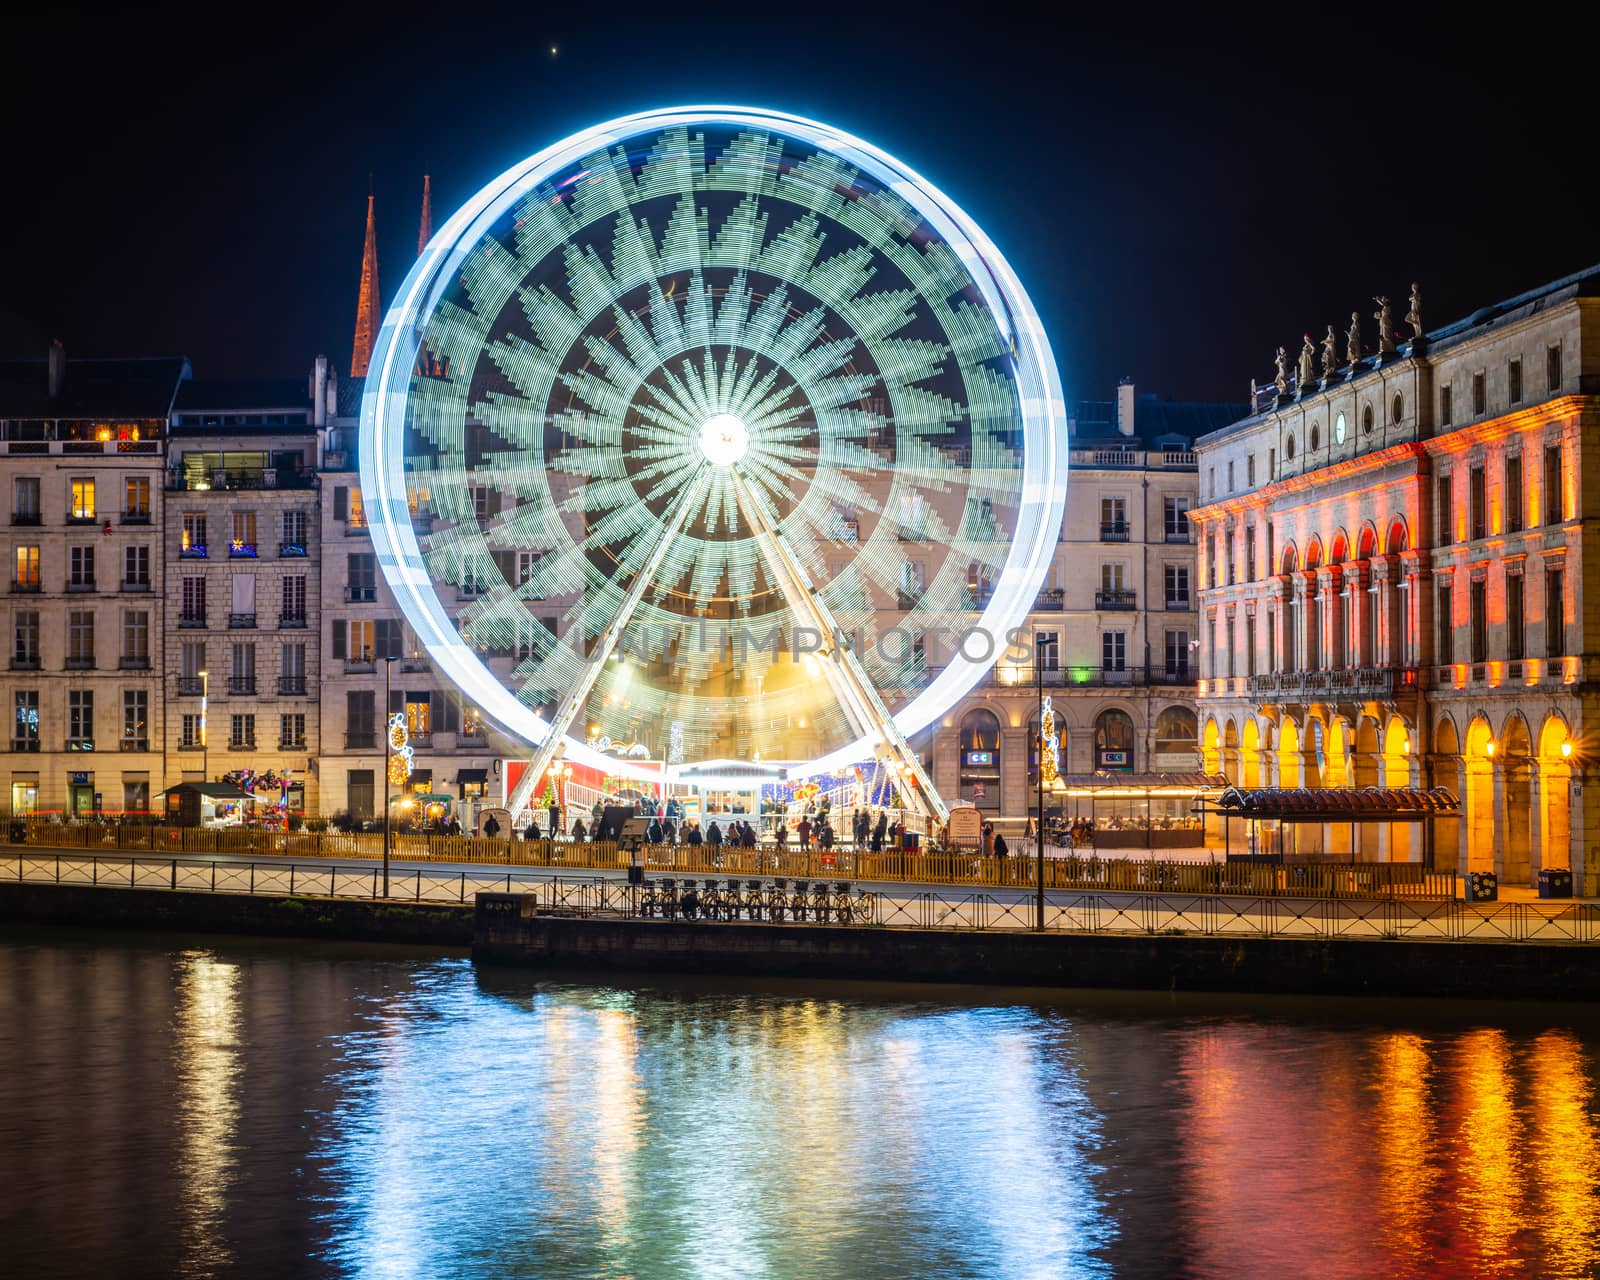 Bayonne ferris wheel at night, France by dutourdumonde